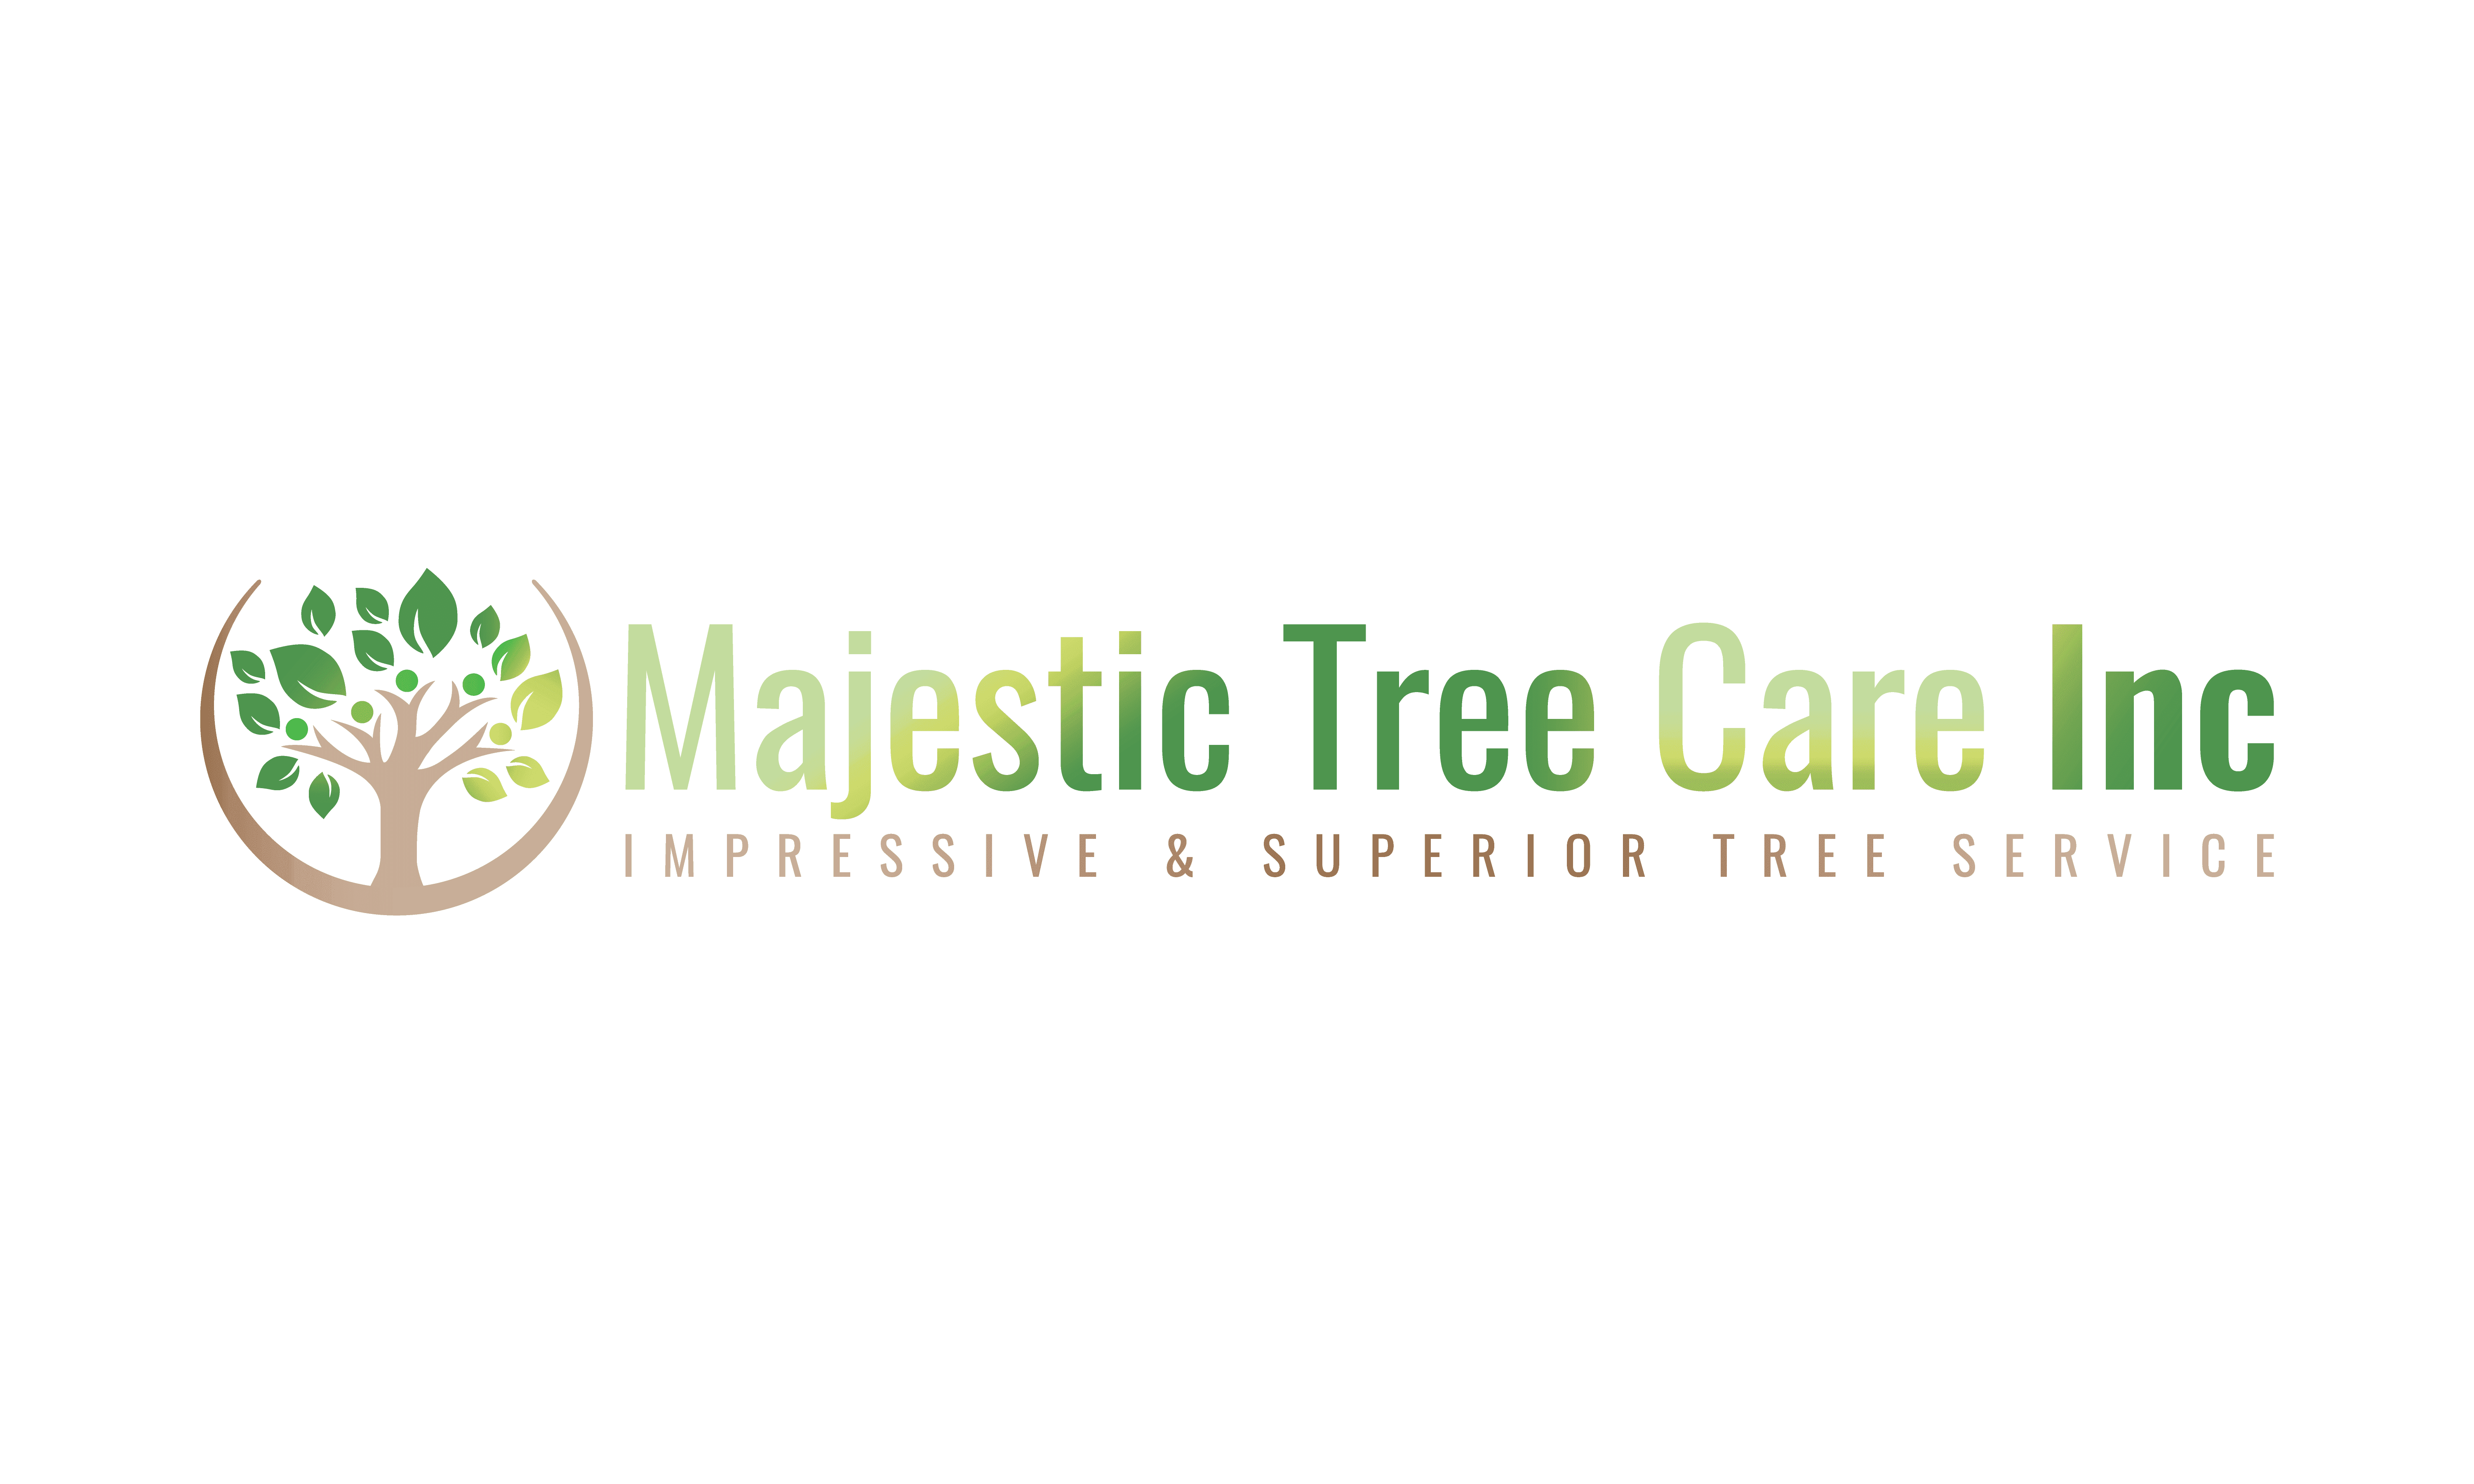 Majestic Tree Care Inc